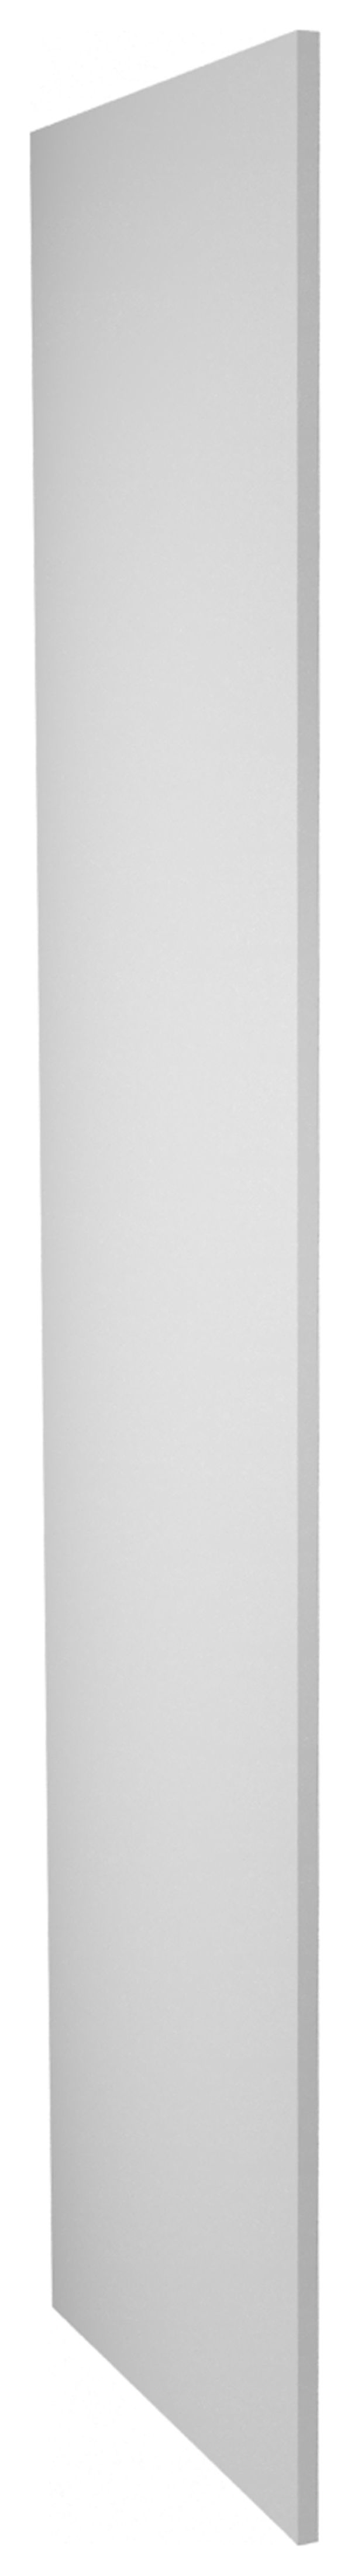 Wickes Ohio Grey Shaker Decor Tall Panel - 18mm